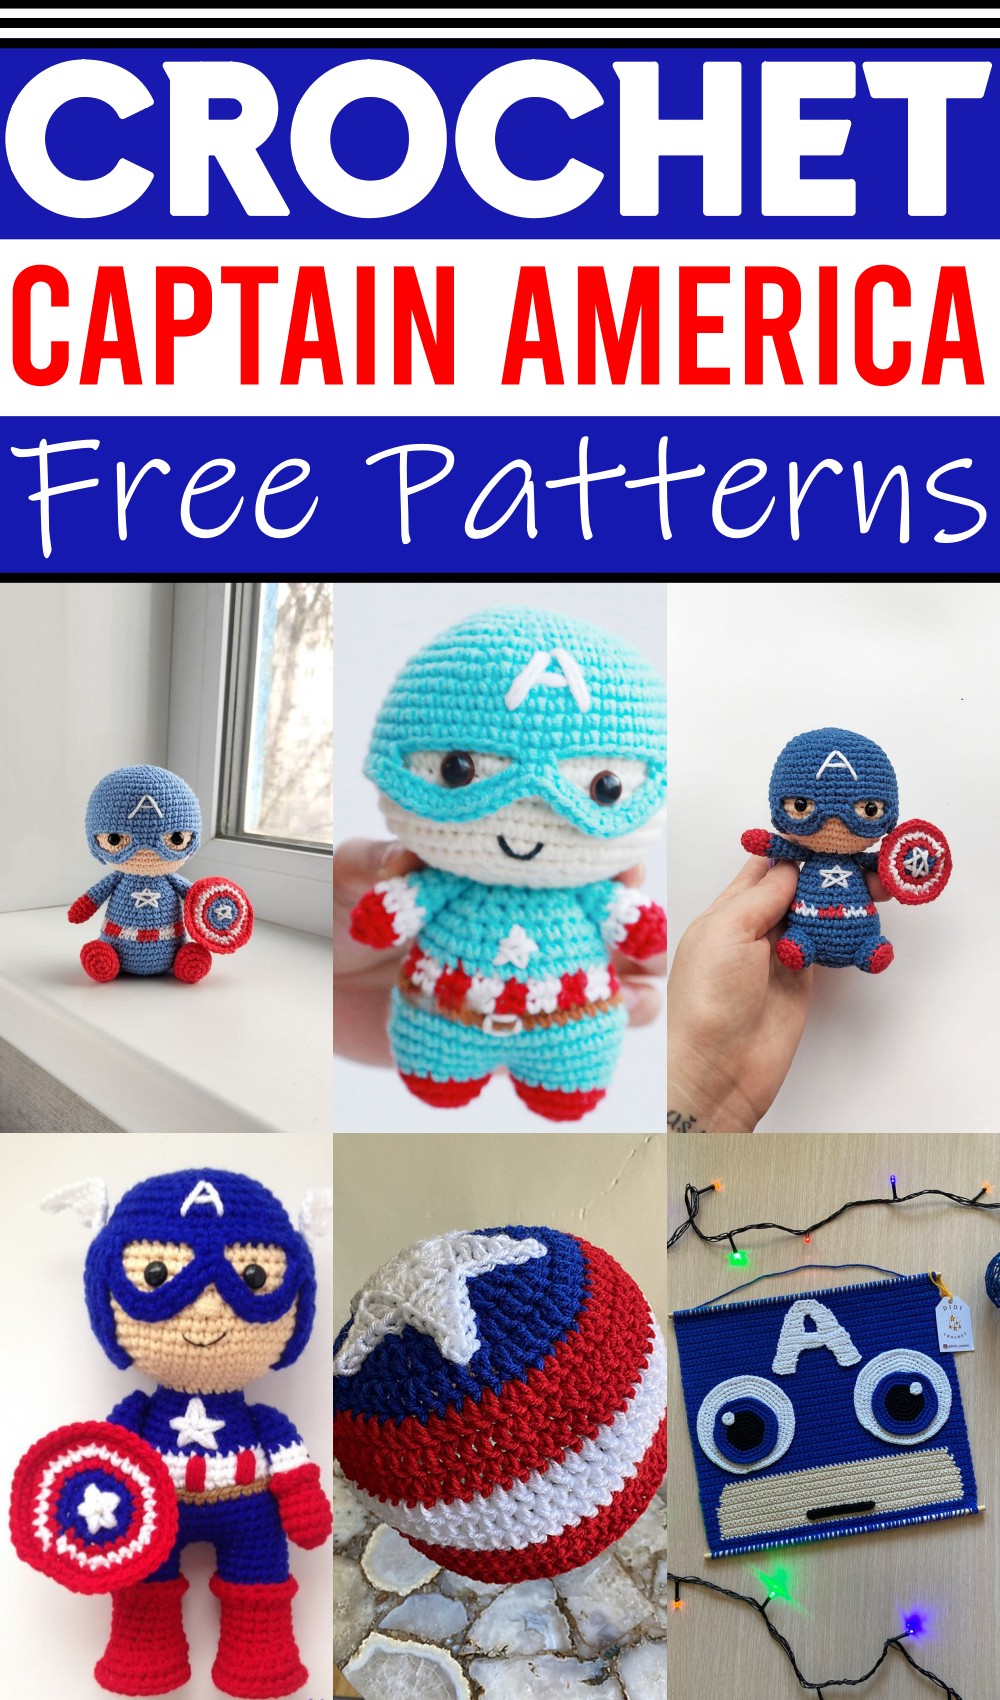 Crochet Captain America Patterns